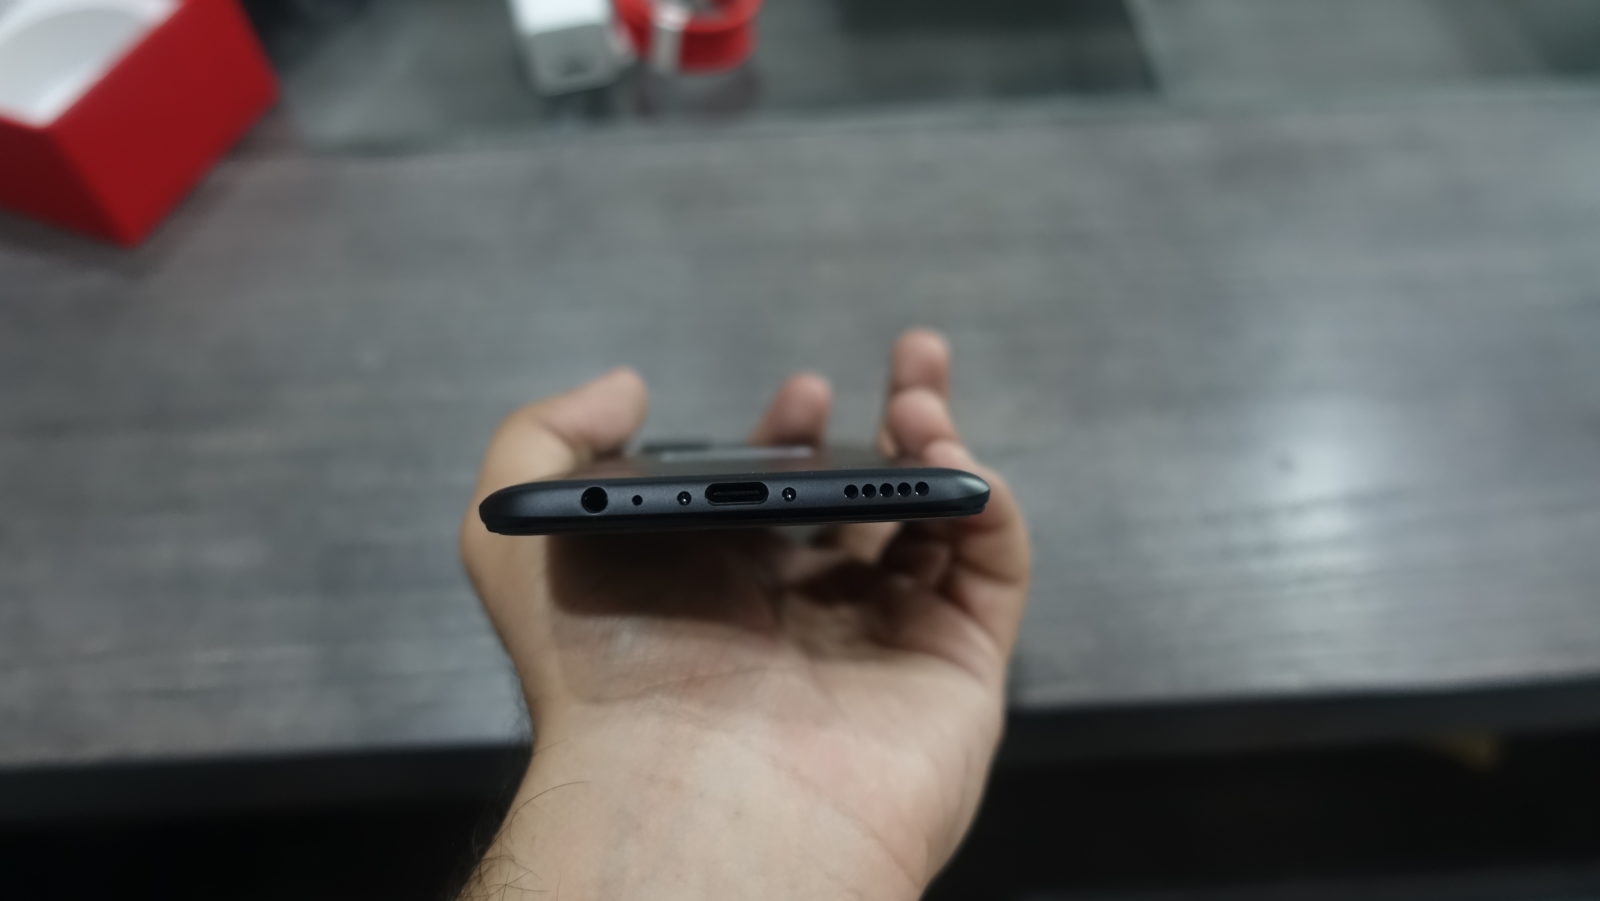 OnePlus 5T headphone jack